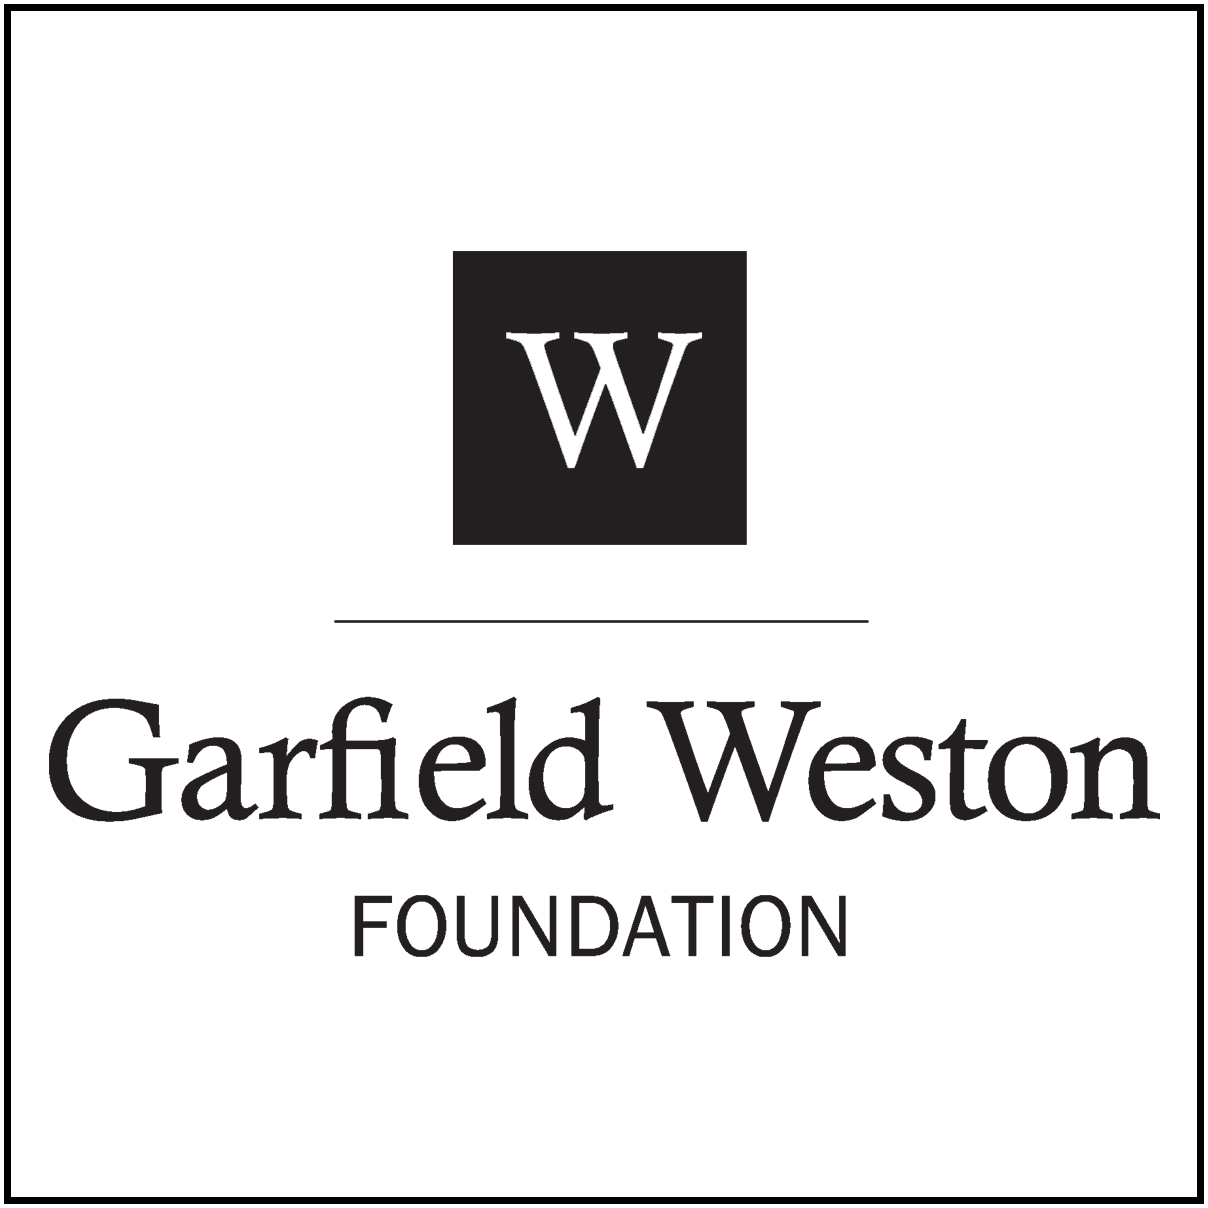 Gardield Weston logo